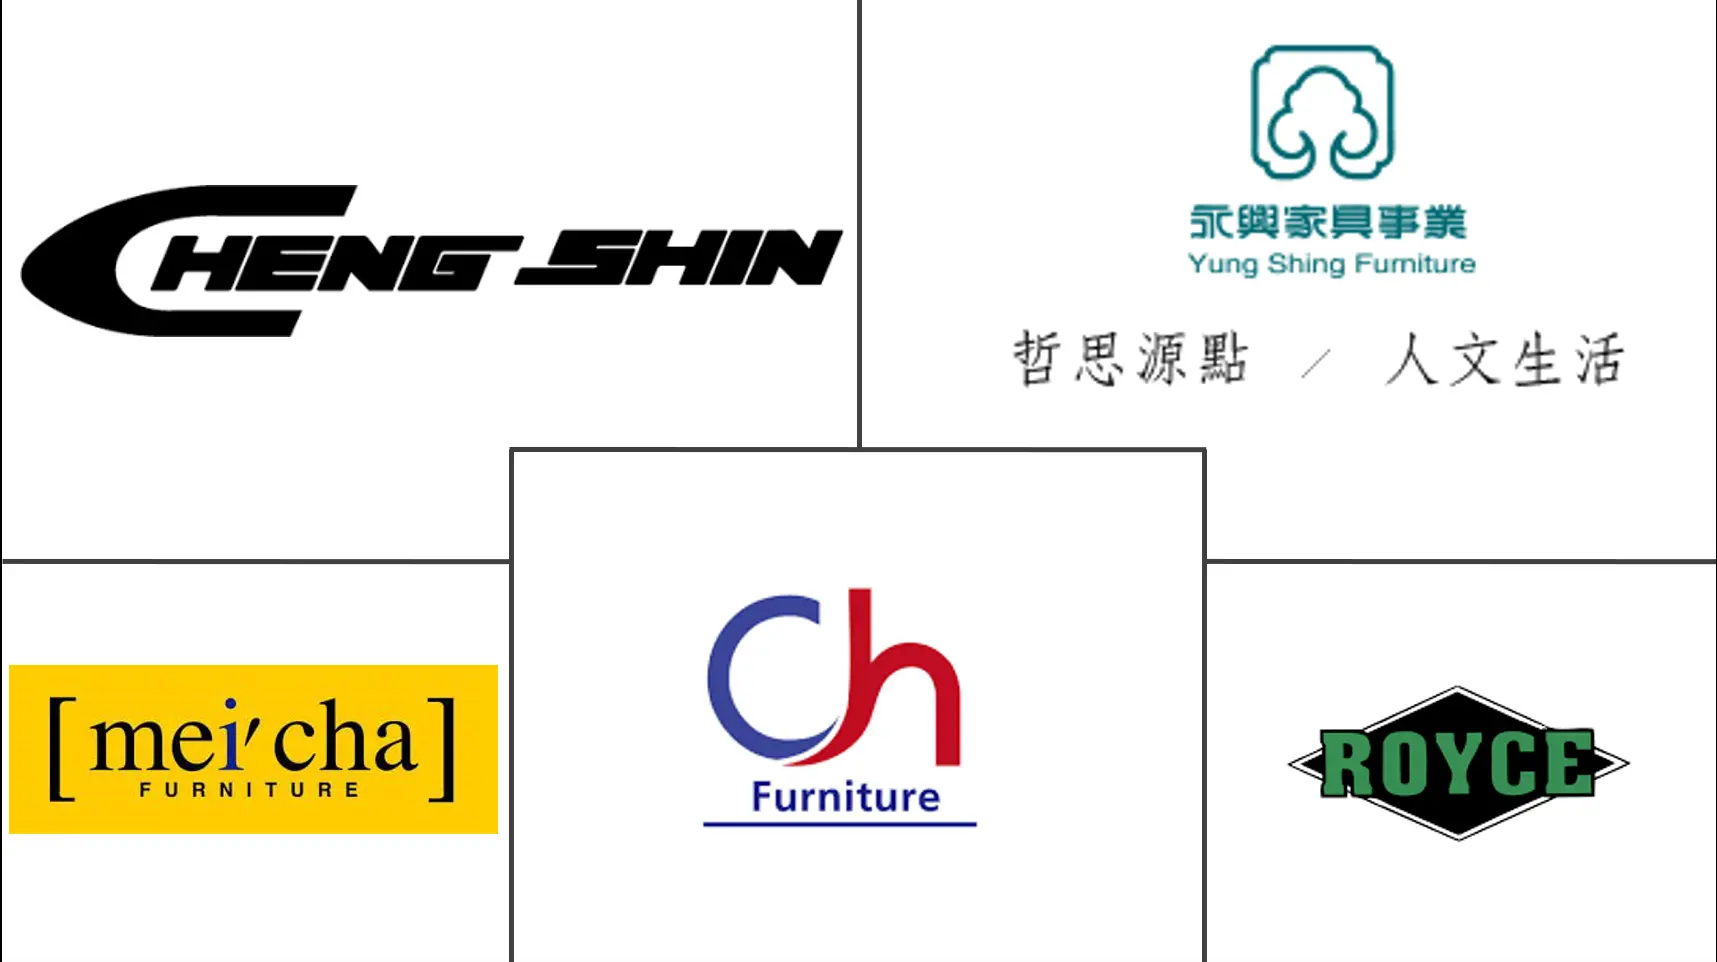 Taiwan Home Furniture Market Major Players